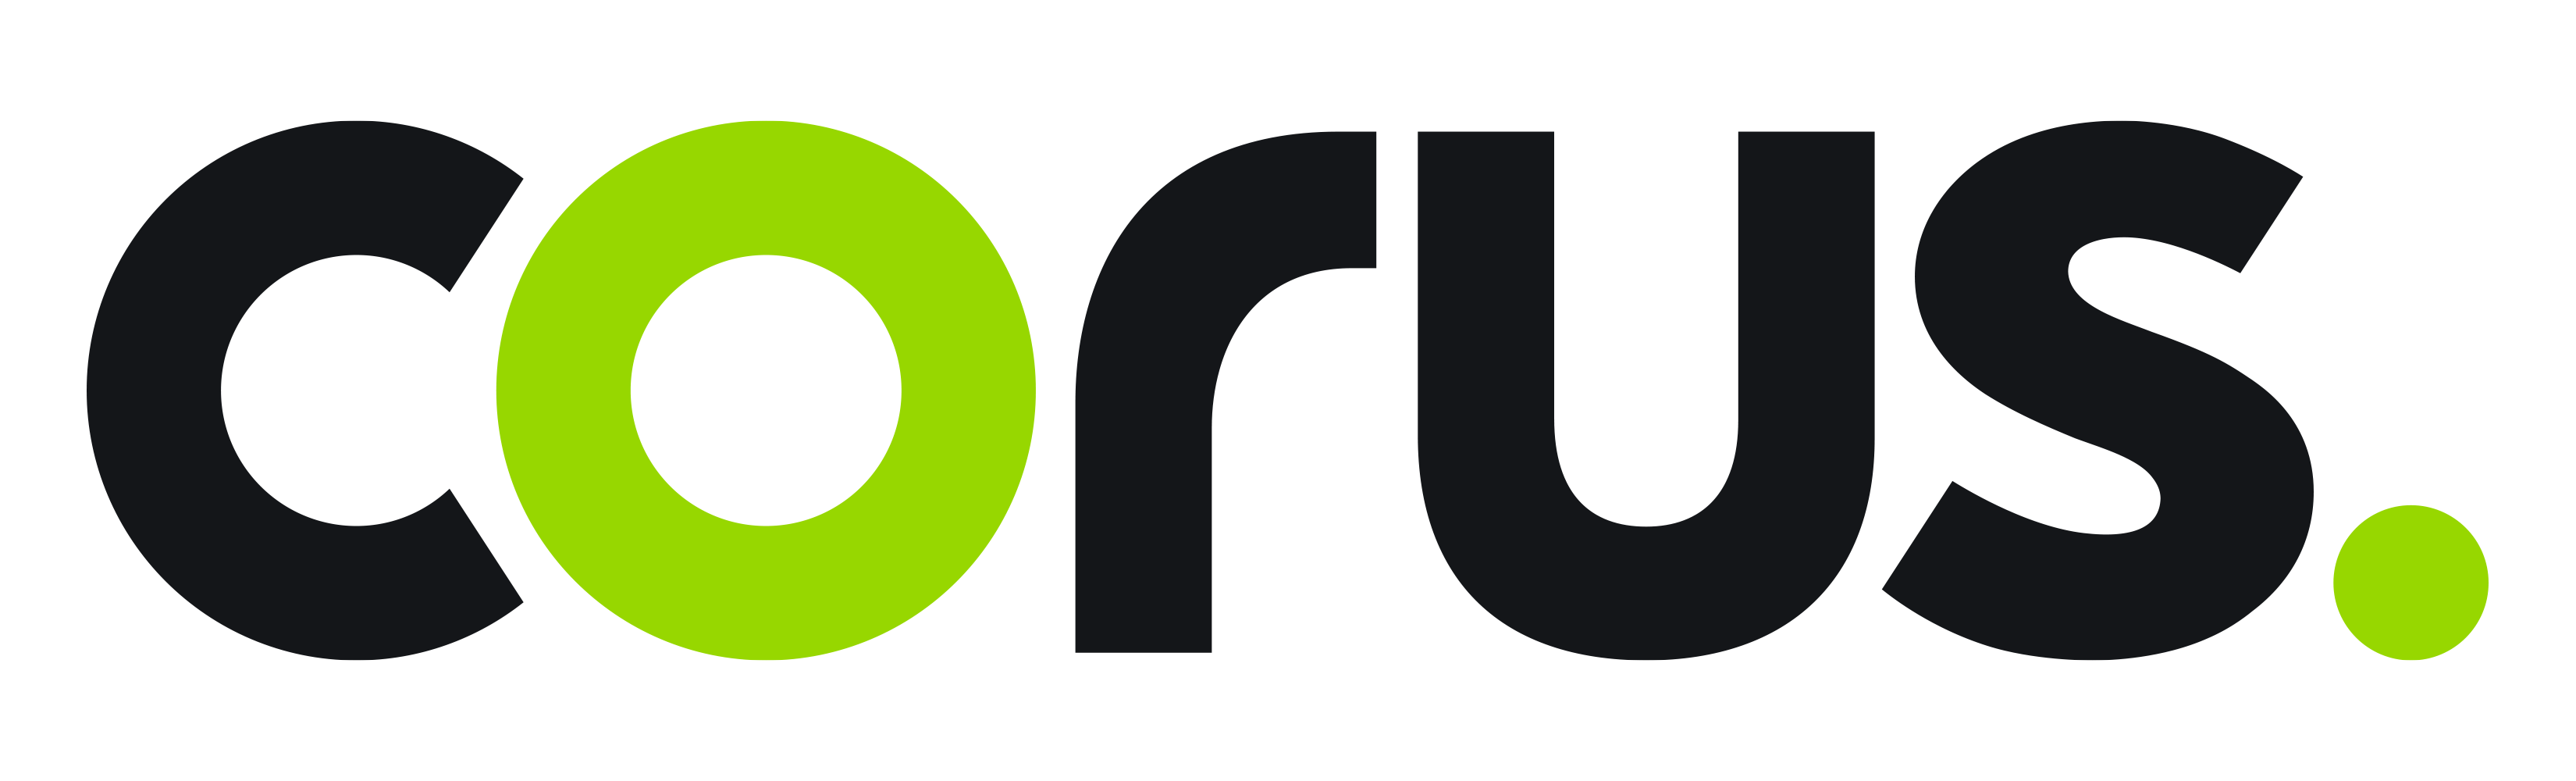 Corus_Logo_RGB_Primary_hi-1